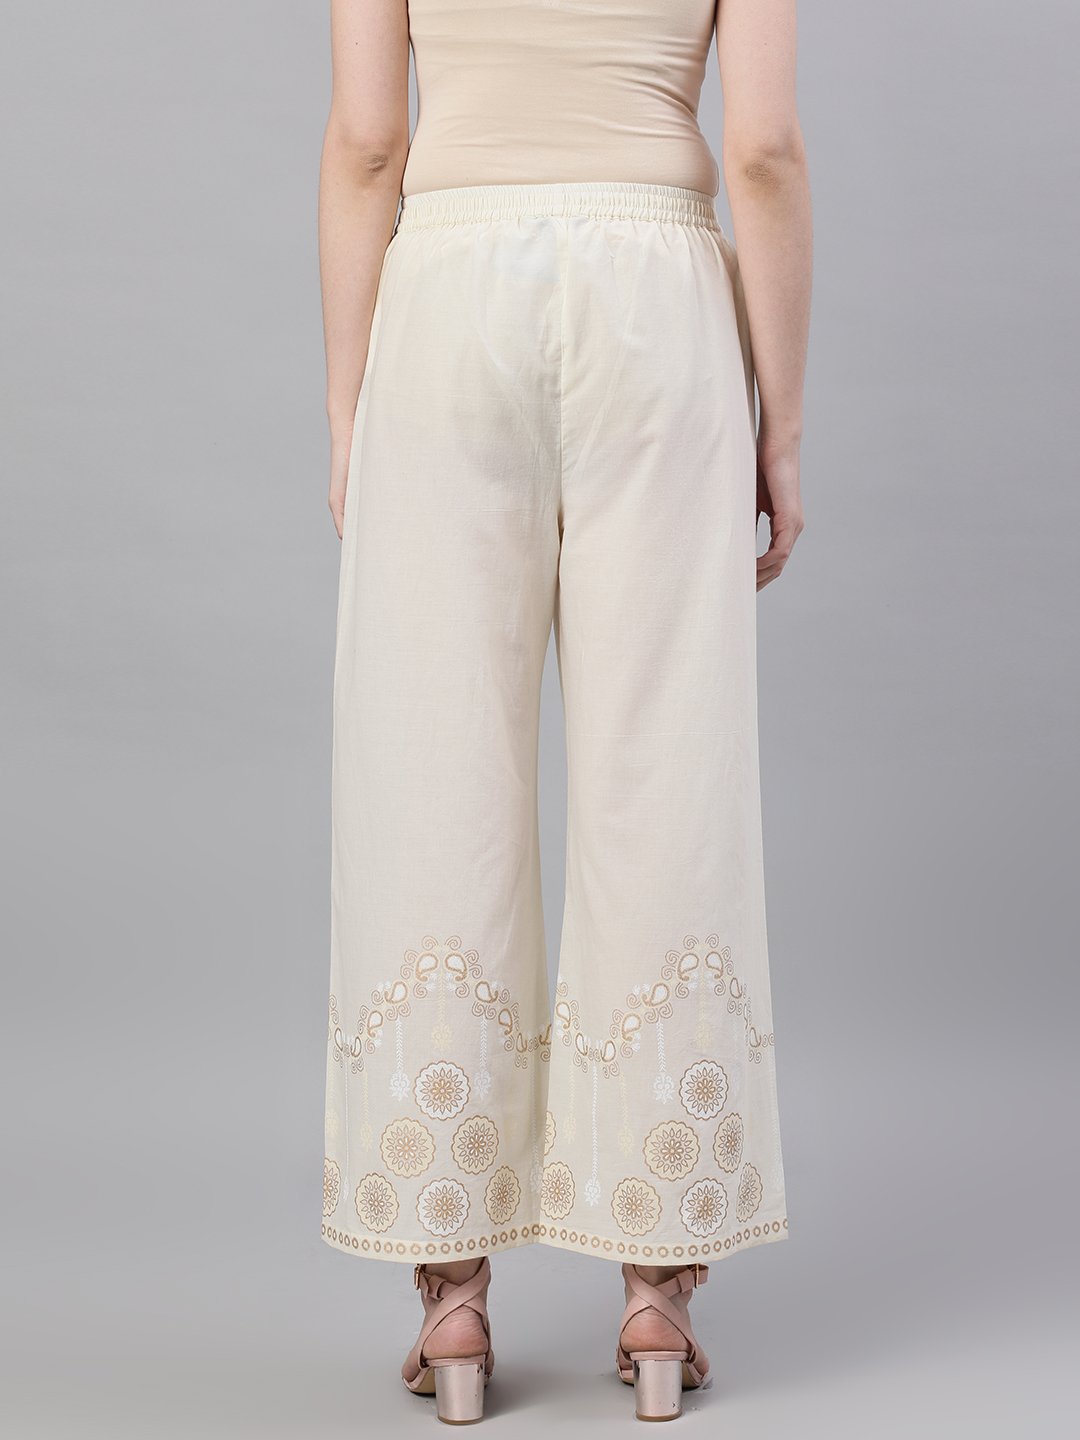 Women's Off White Trouser With Border Print - Nayo Clothing